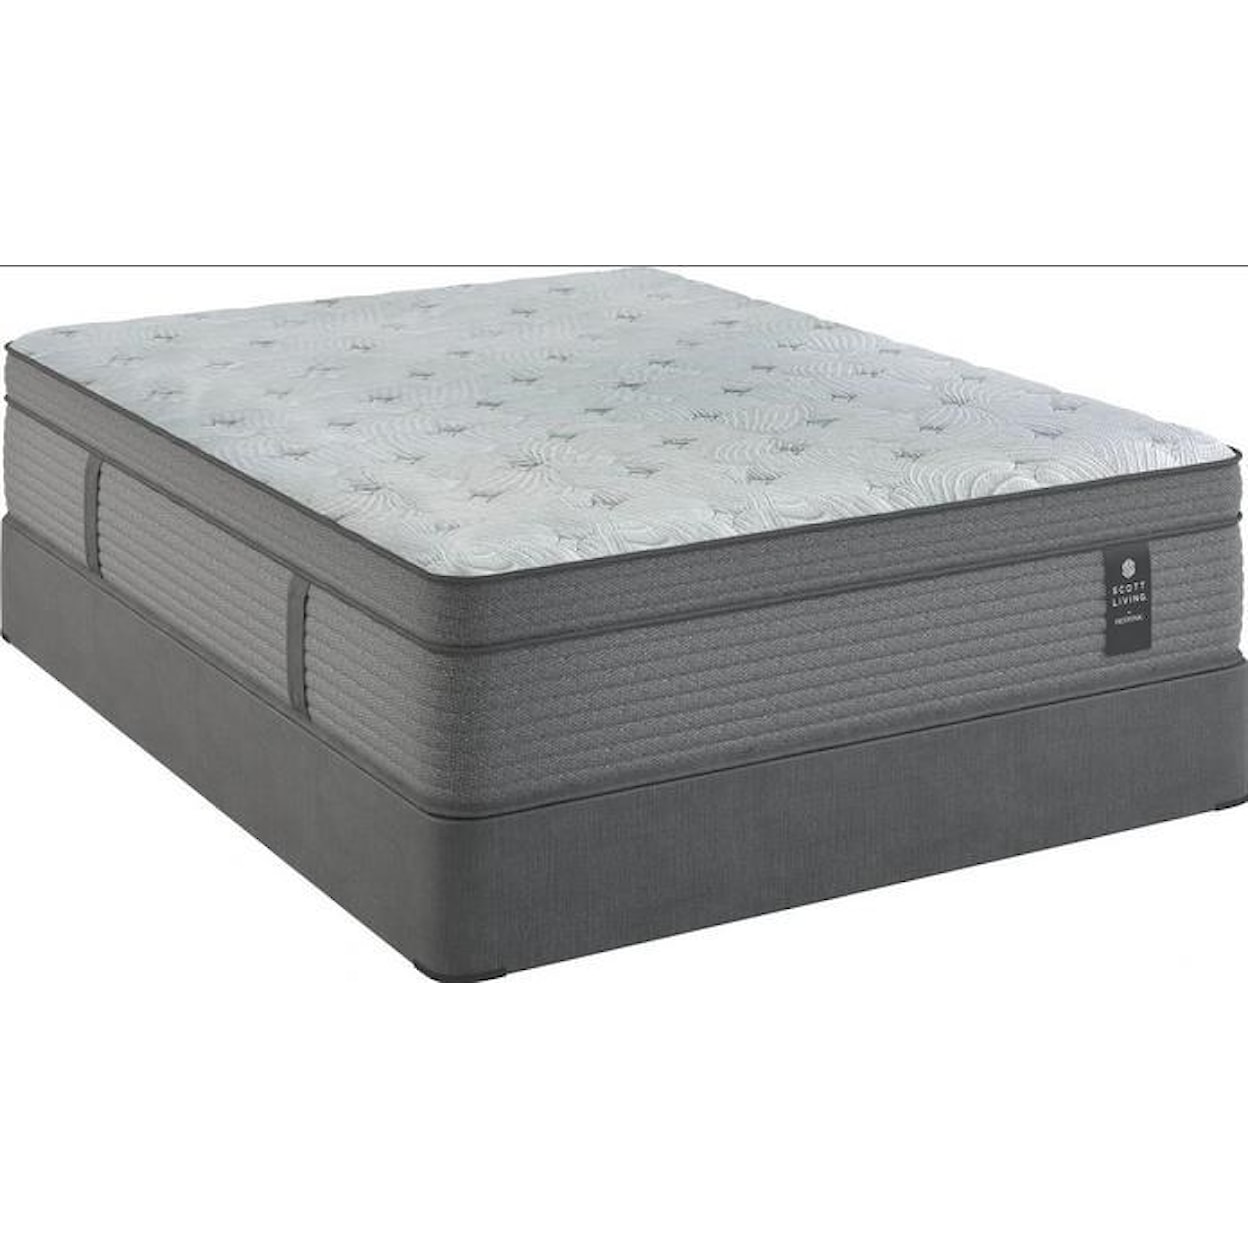 Restonic 5001654 Newport Euro Top Newport Twin XL mattress